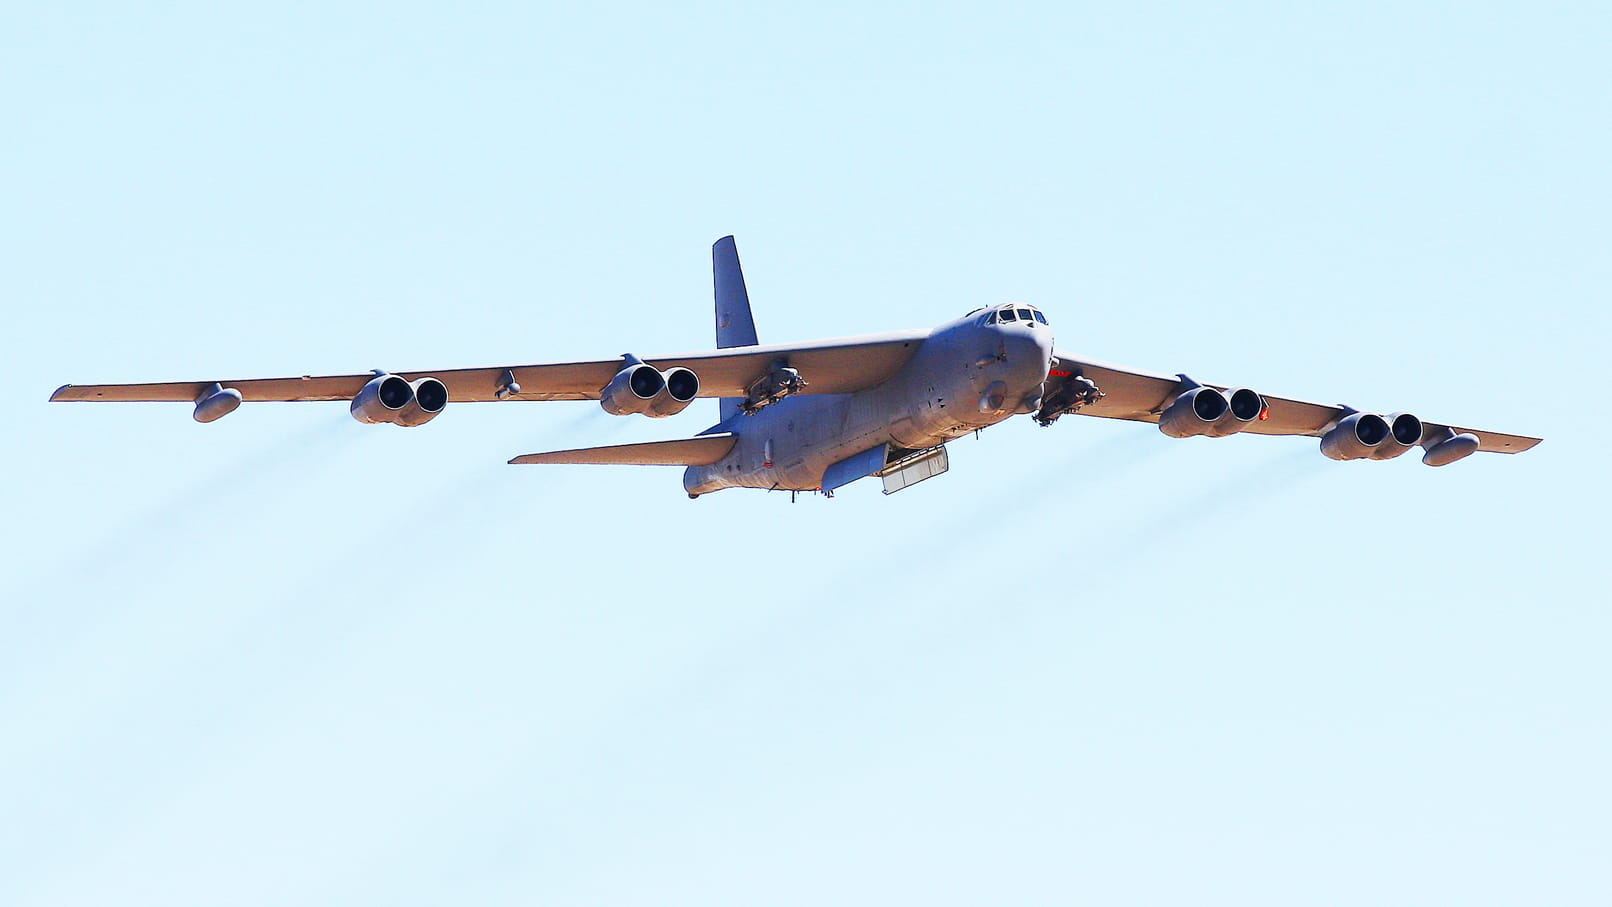 B-52 military plane in flight